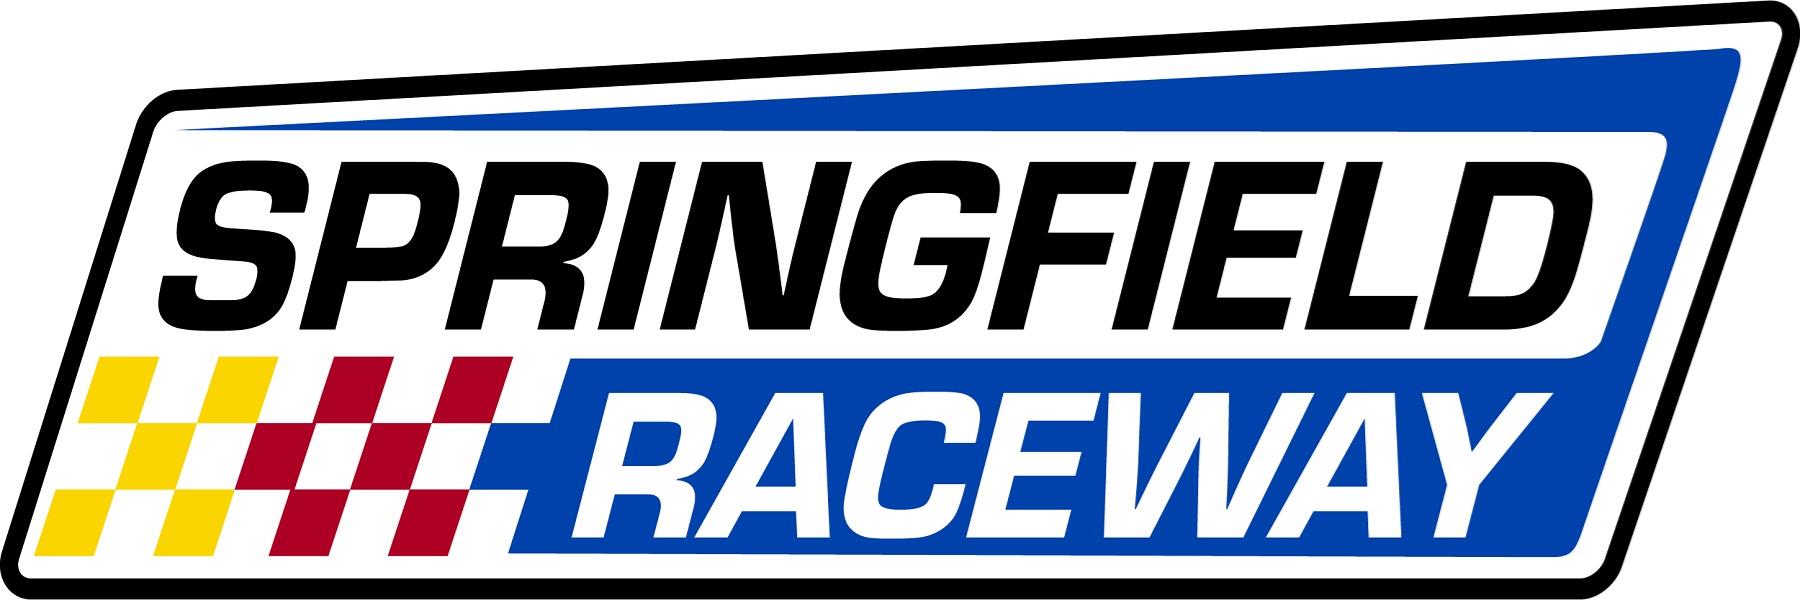 10/15/2022 - Springfield Raceway